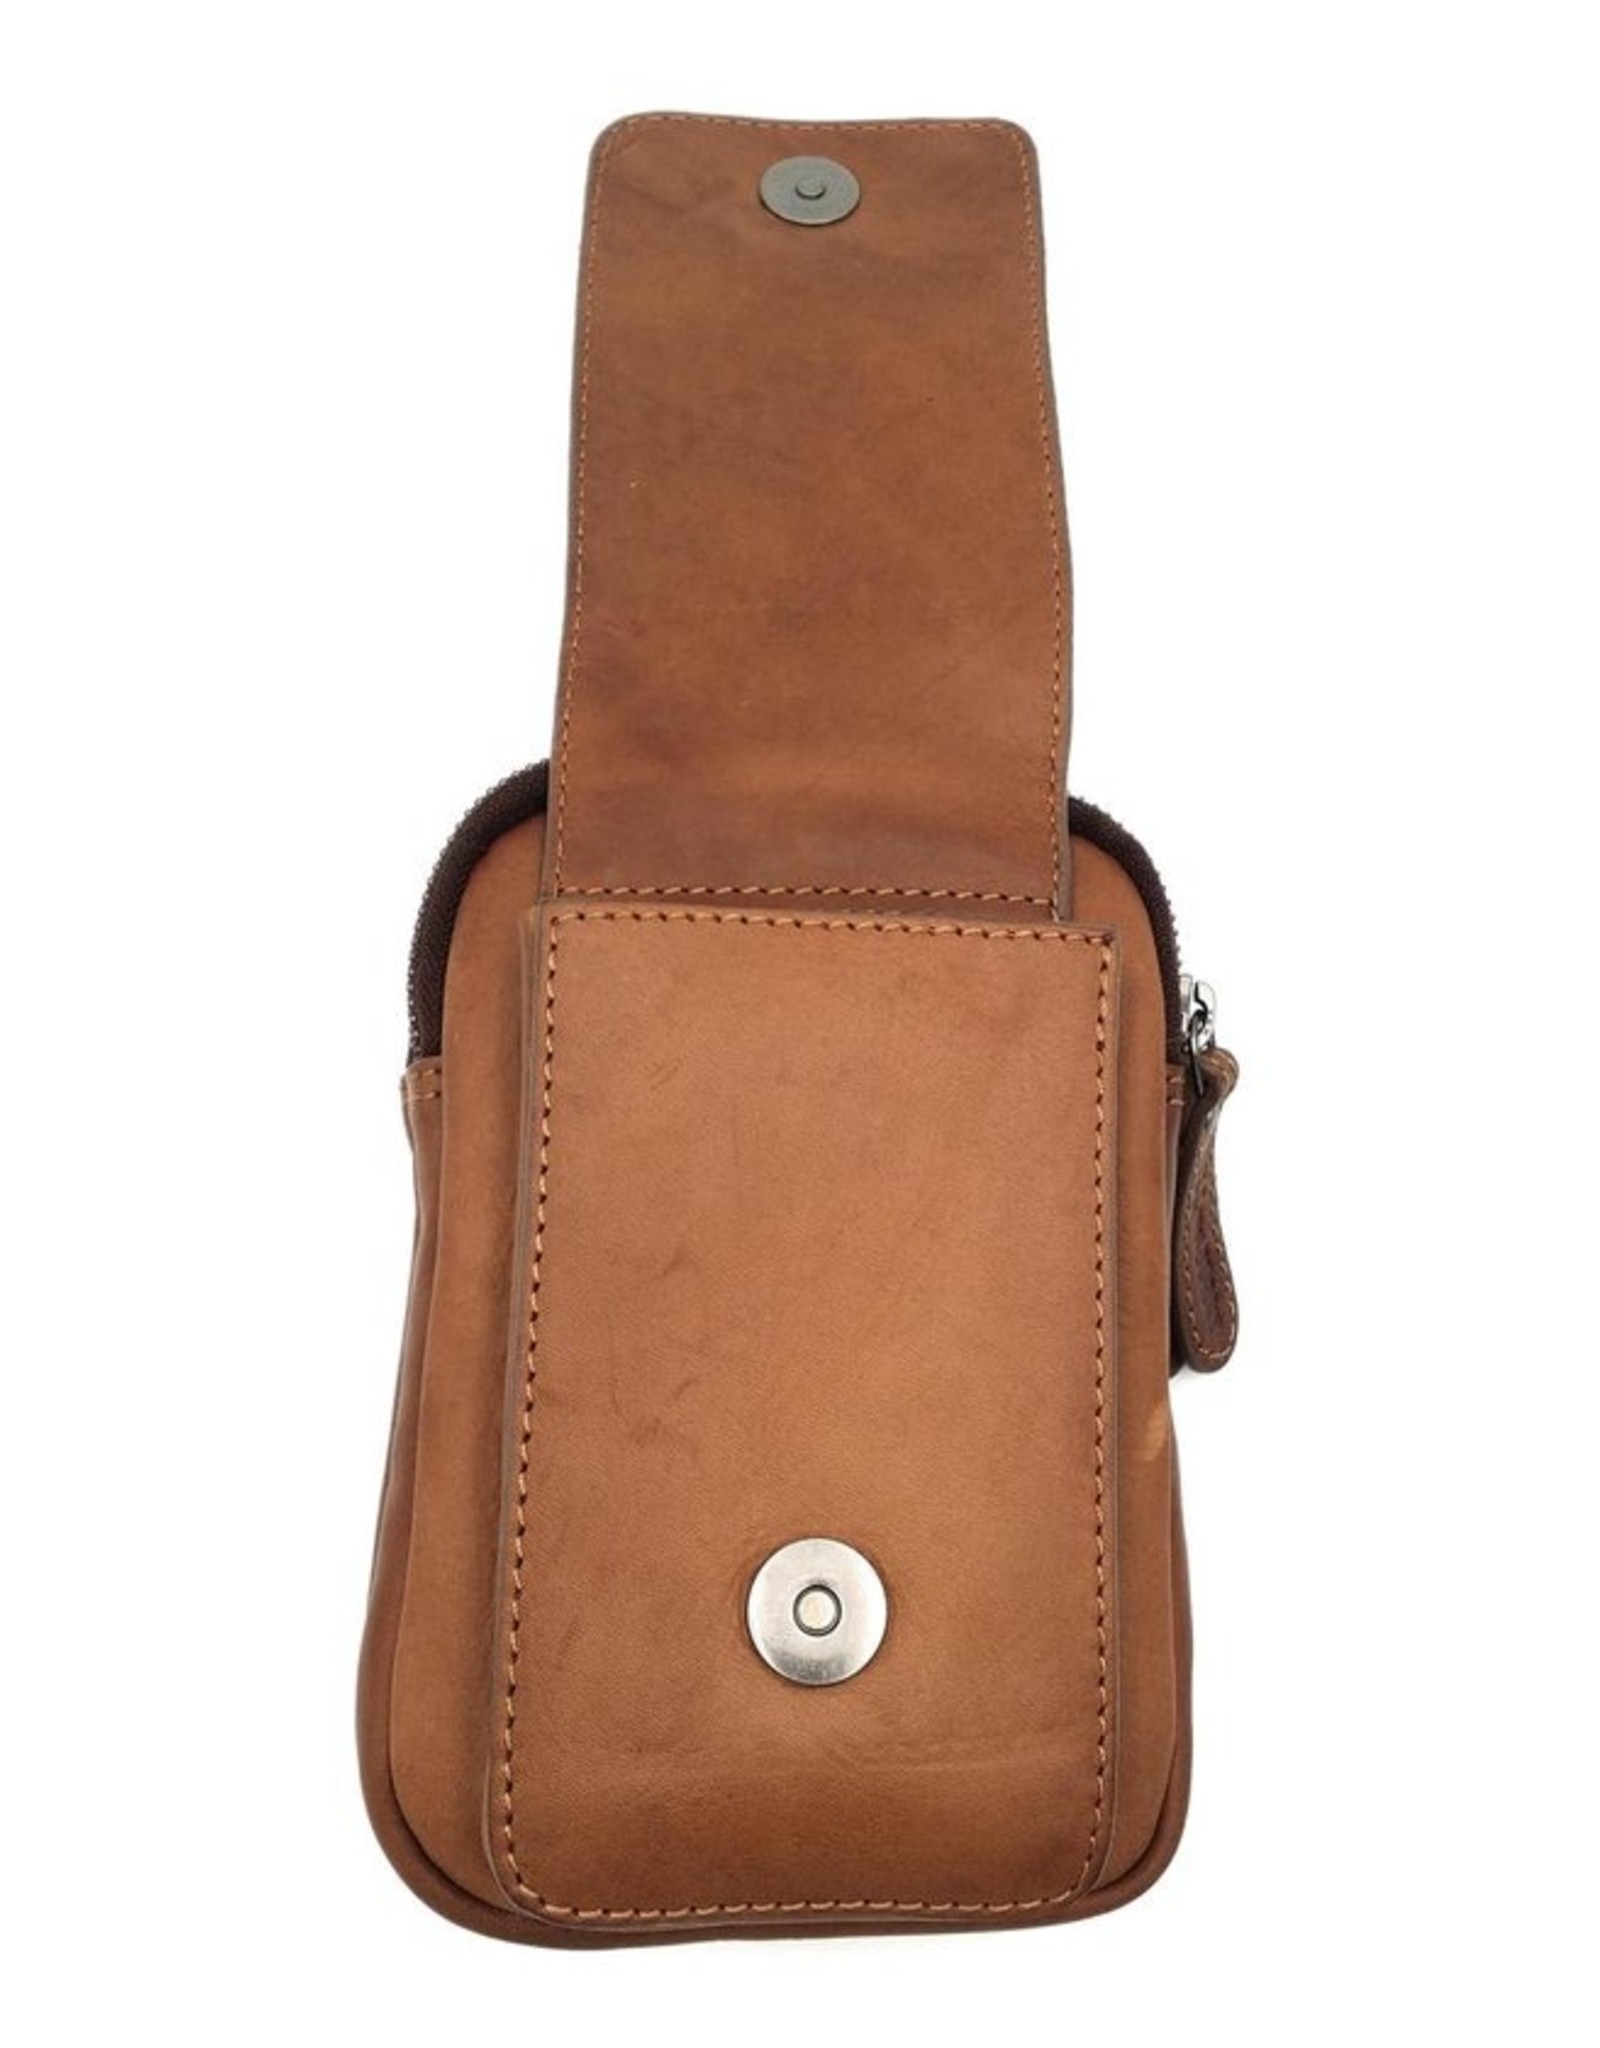 HillBurry Leather bags - Leather Belt Bag Cognac HillBurry